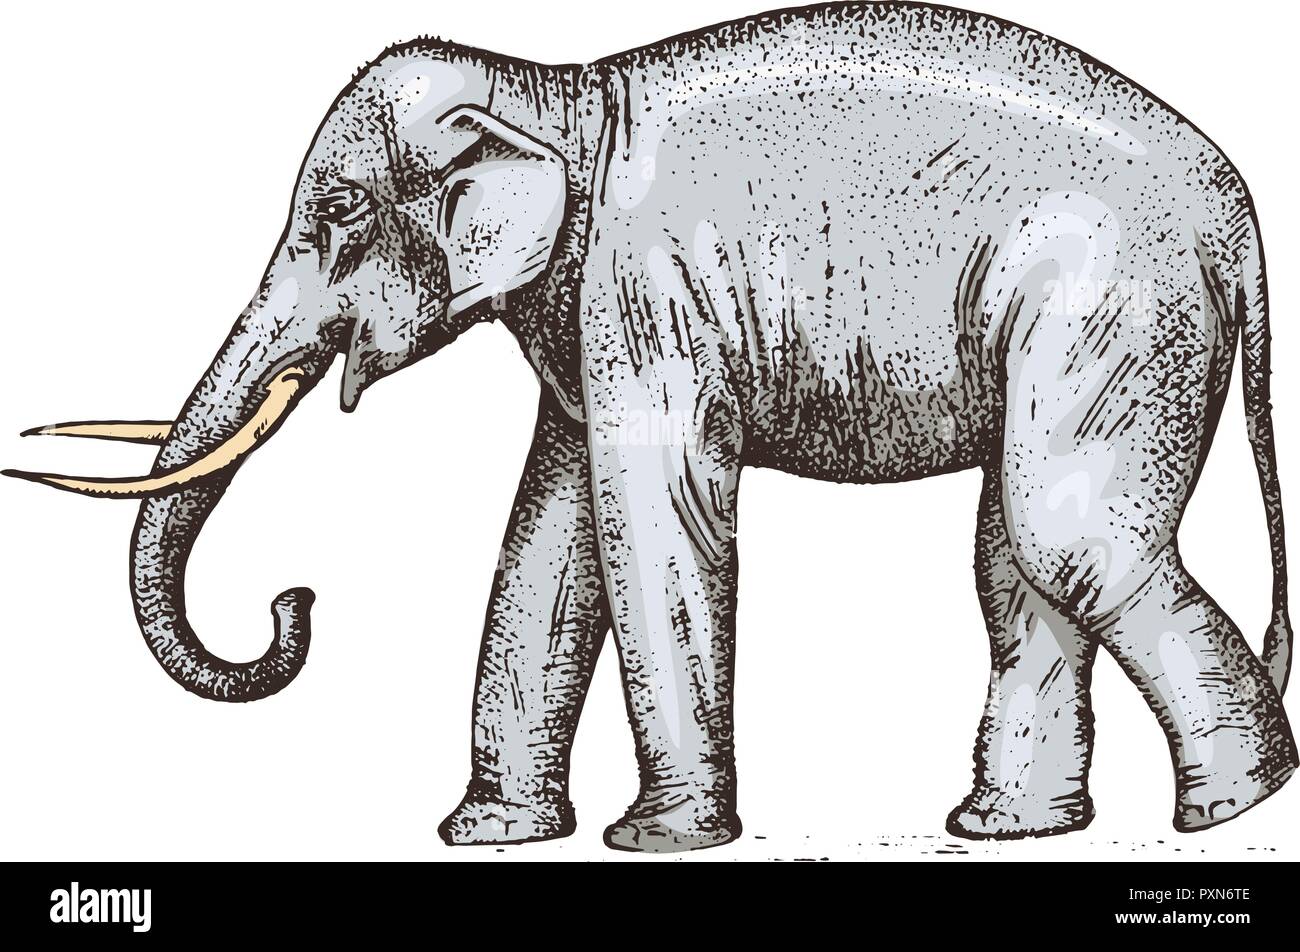 Share 153+ elephant pencil sketch images best